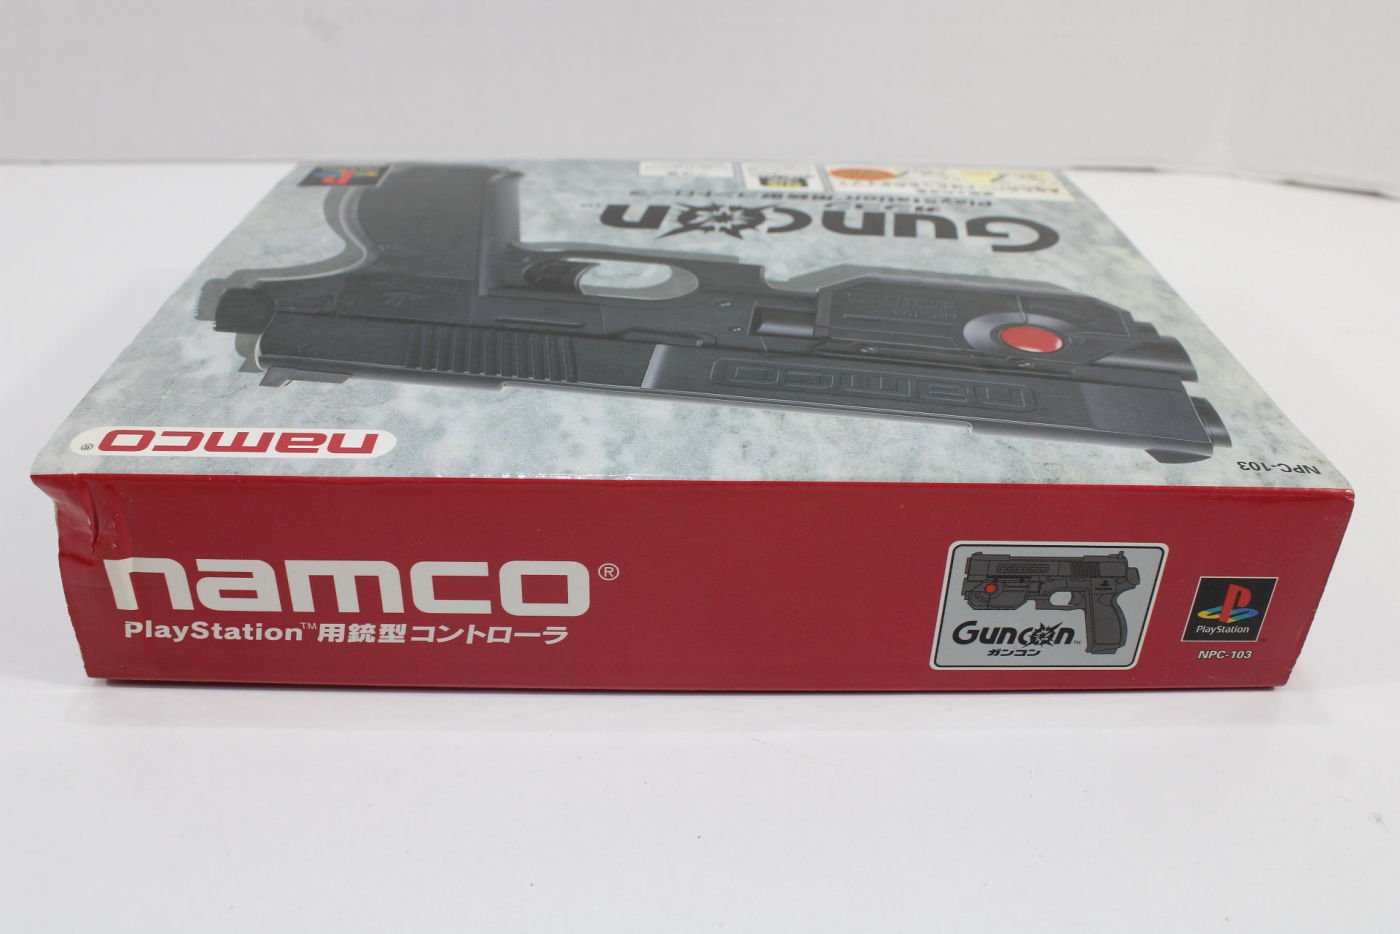 Boxed Namco NPC-103 GunCon Light Gun Controller Playstation PS1 PS2 (B)